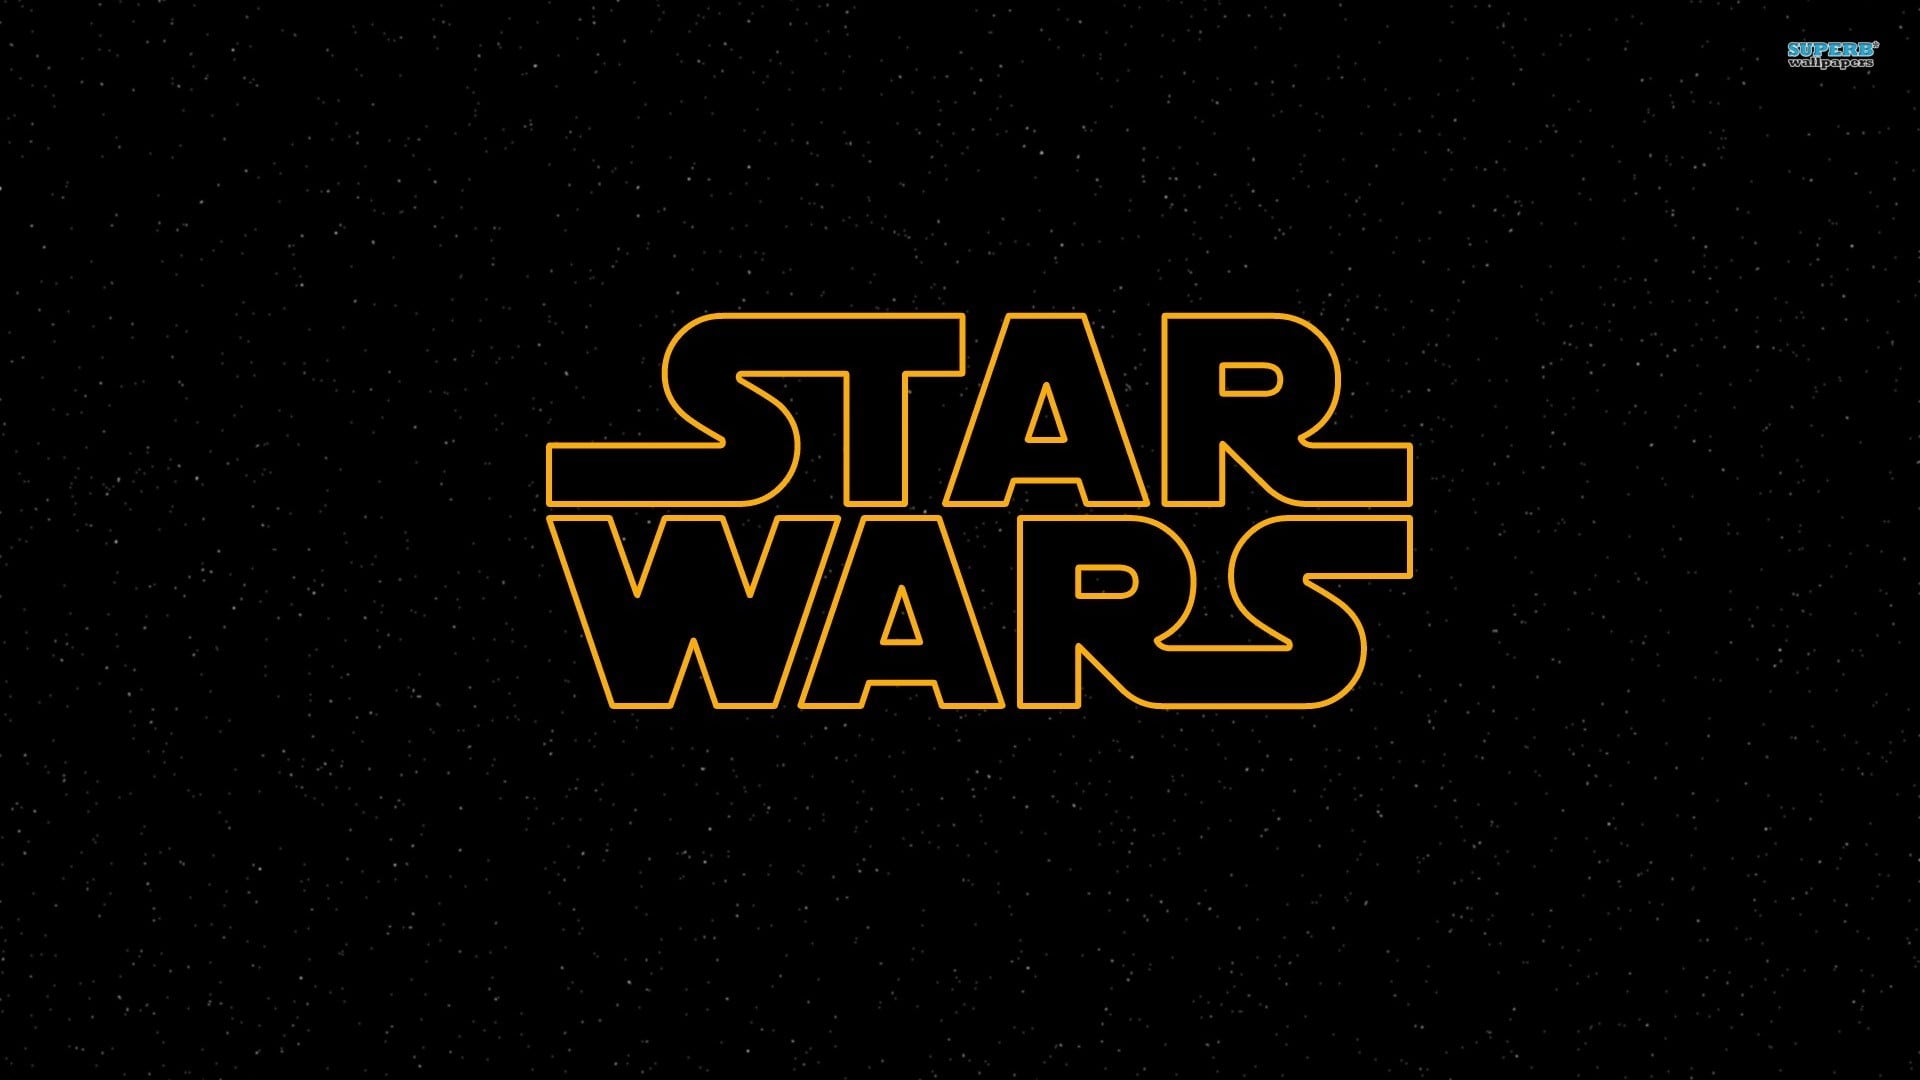 Star Wars logo, Star Wars